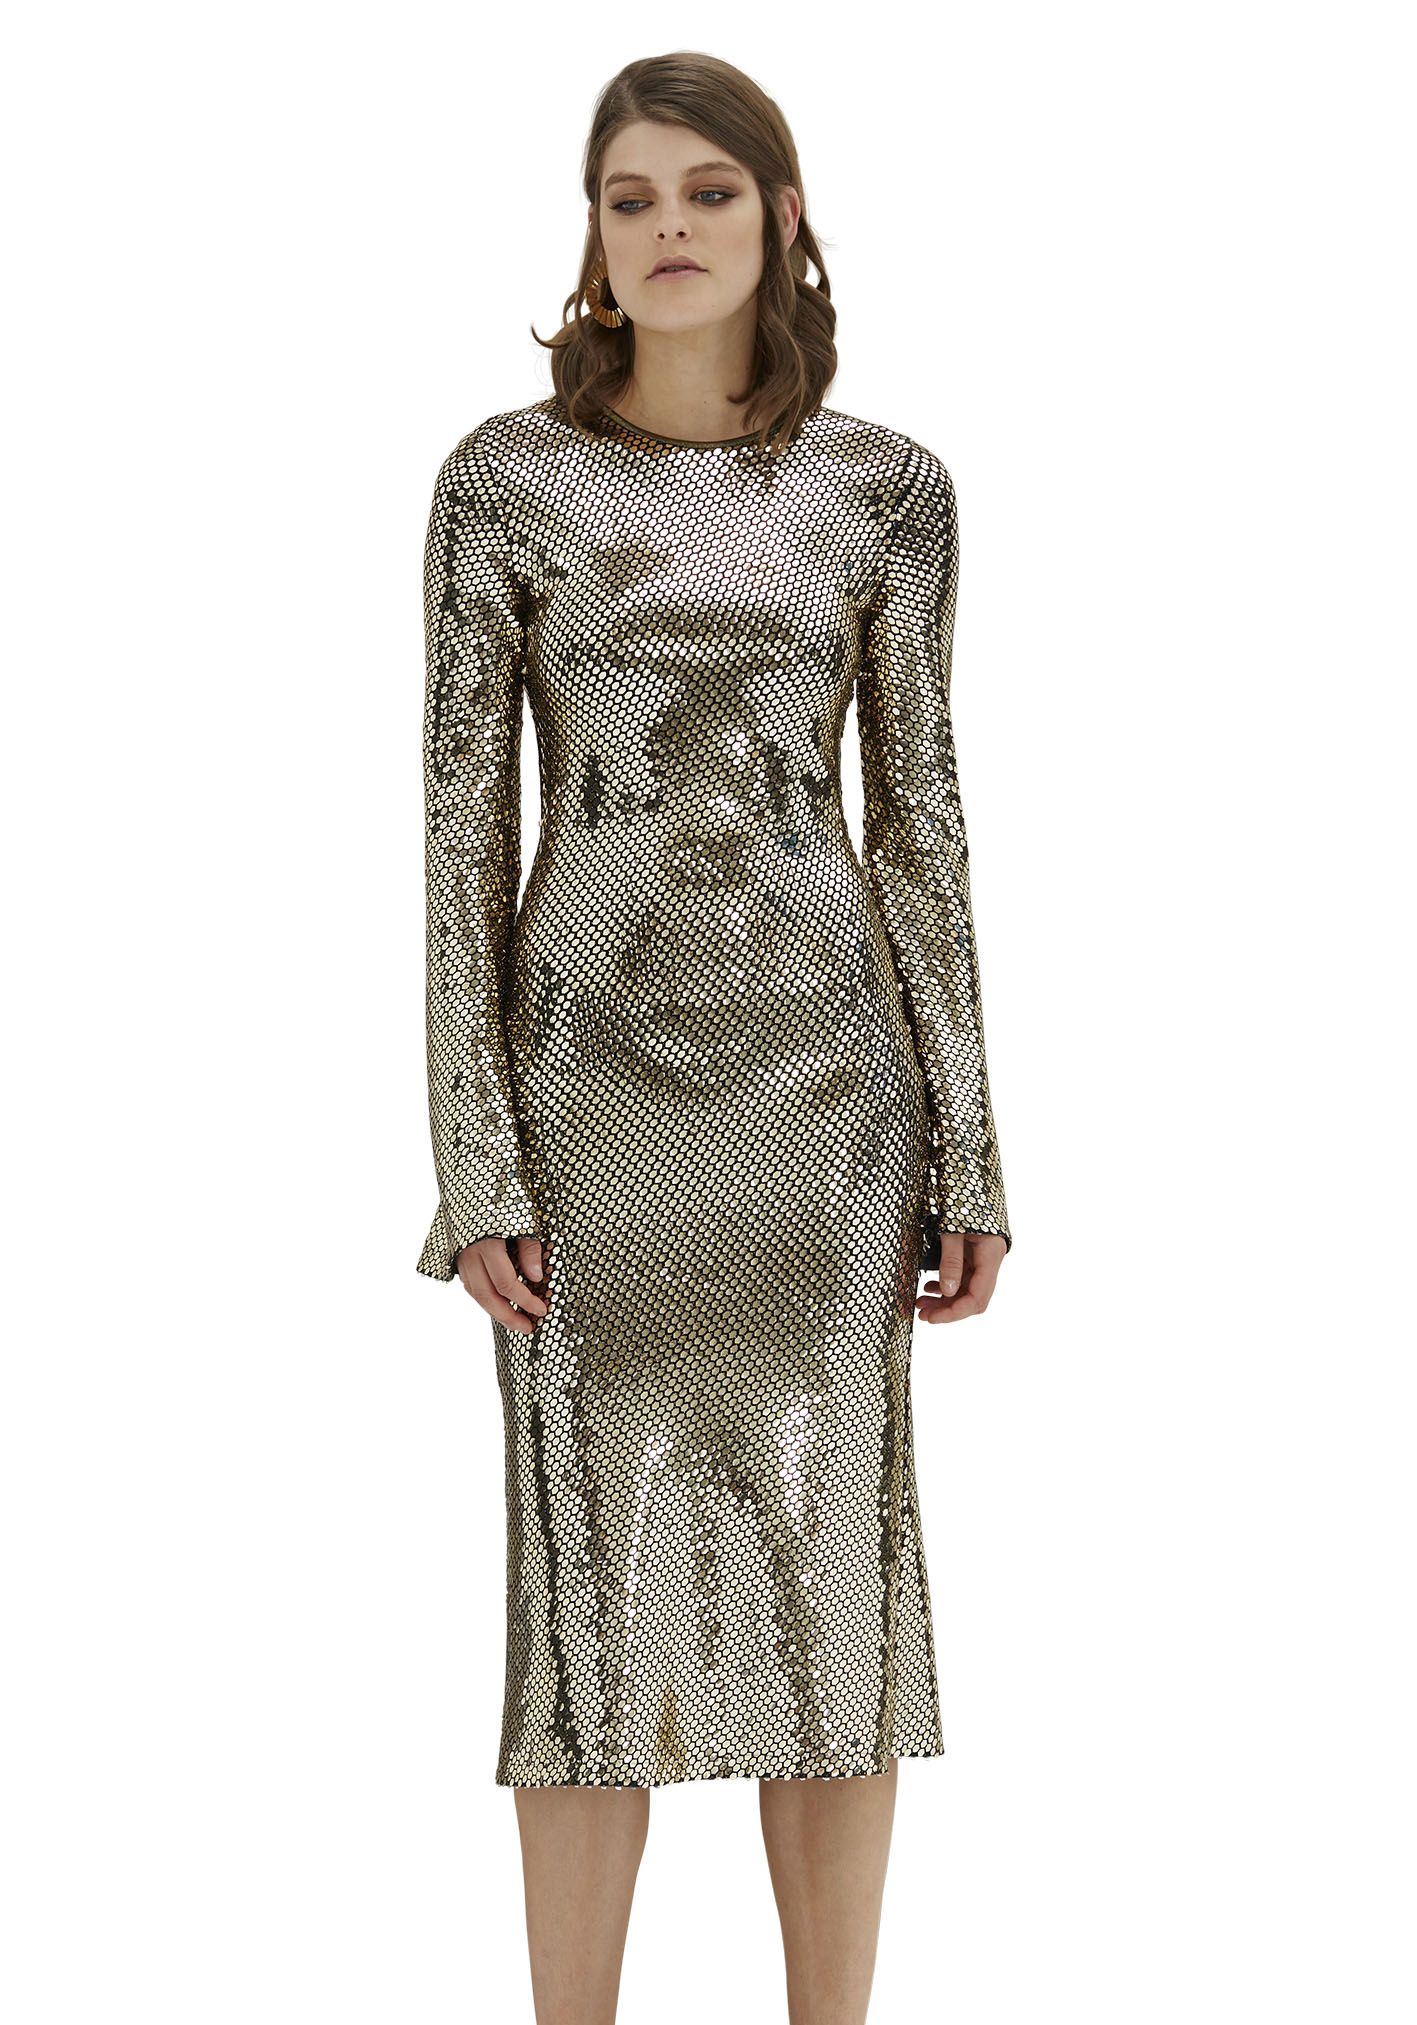 Paris Hilton By Johnny Gold Dress | Who What Wear